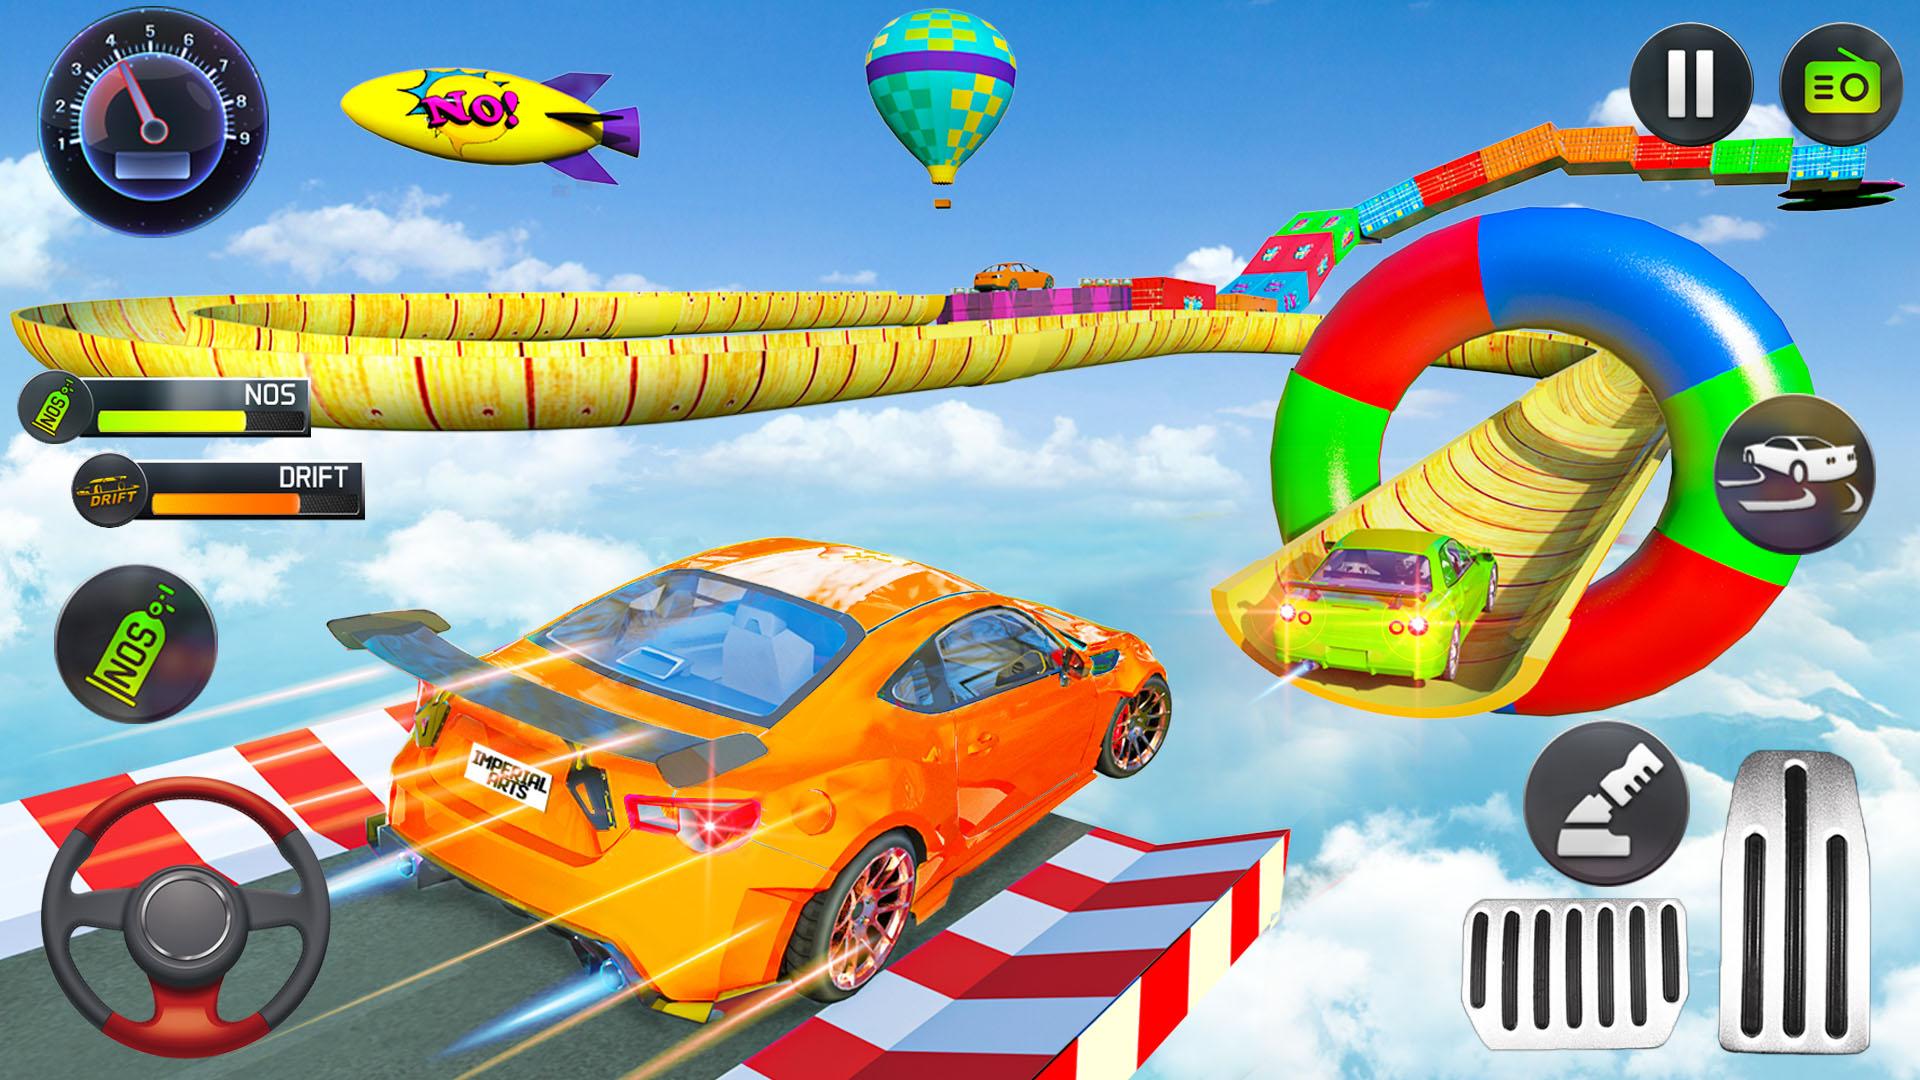 Play Extreme Ramp Car Stunts Game 3d